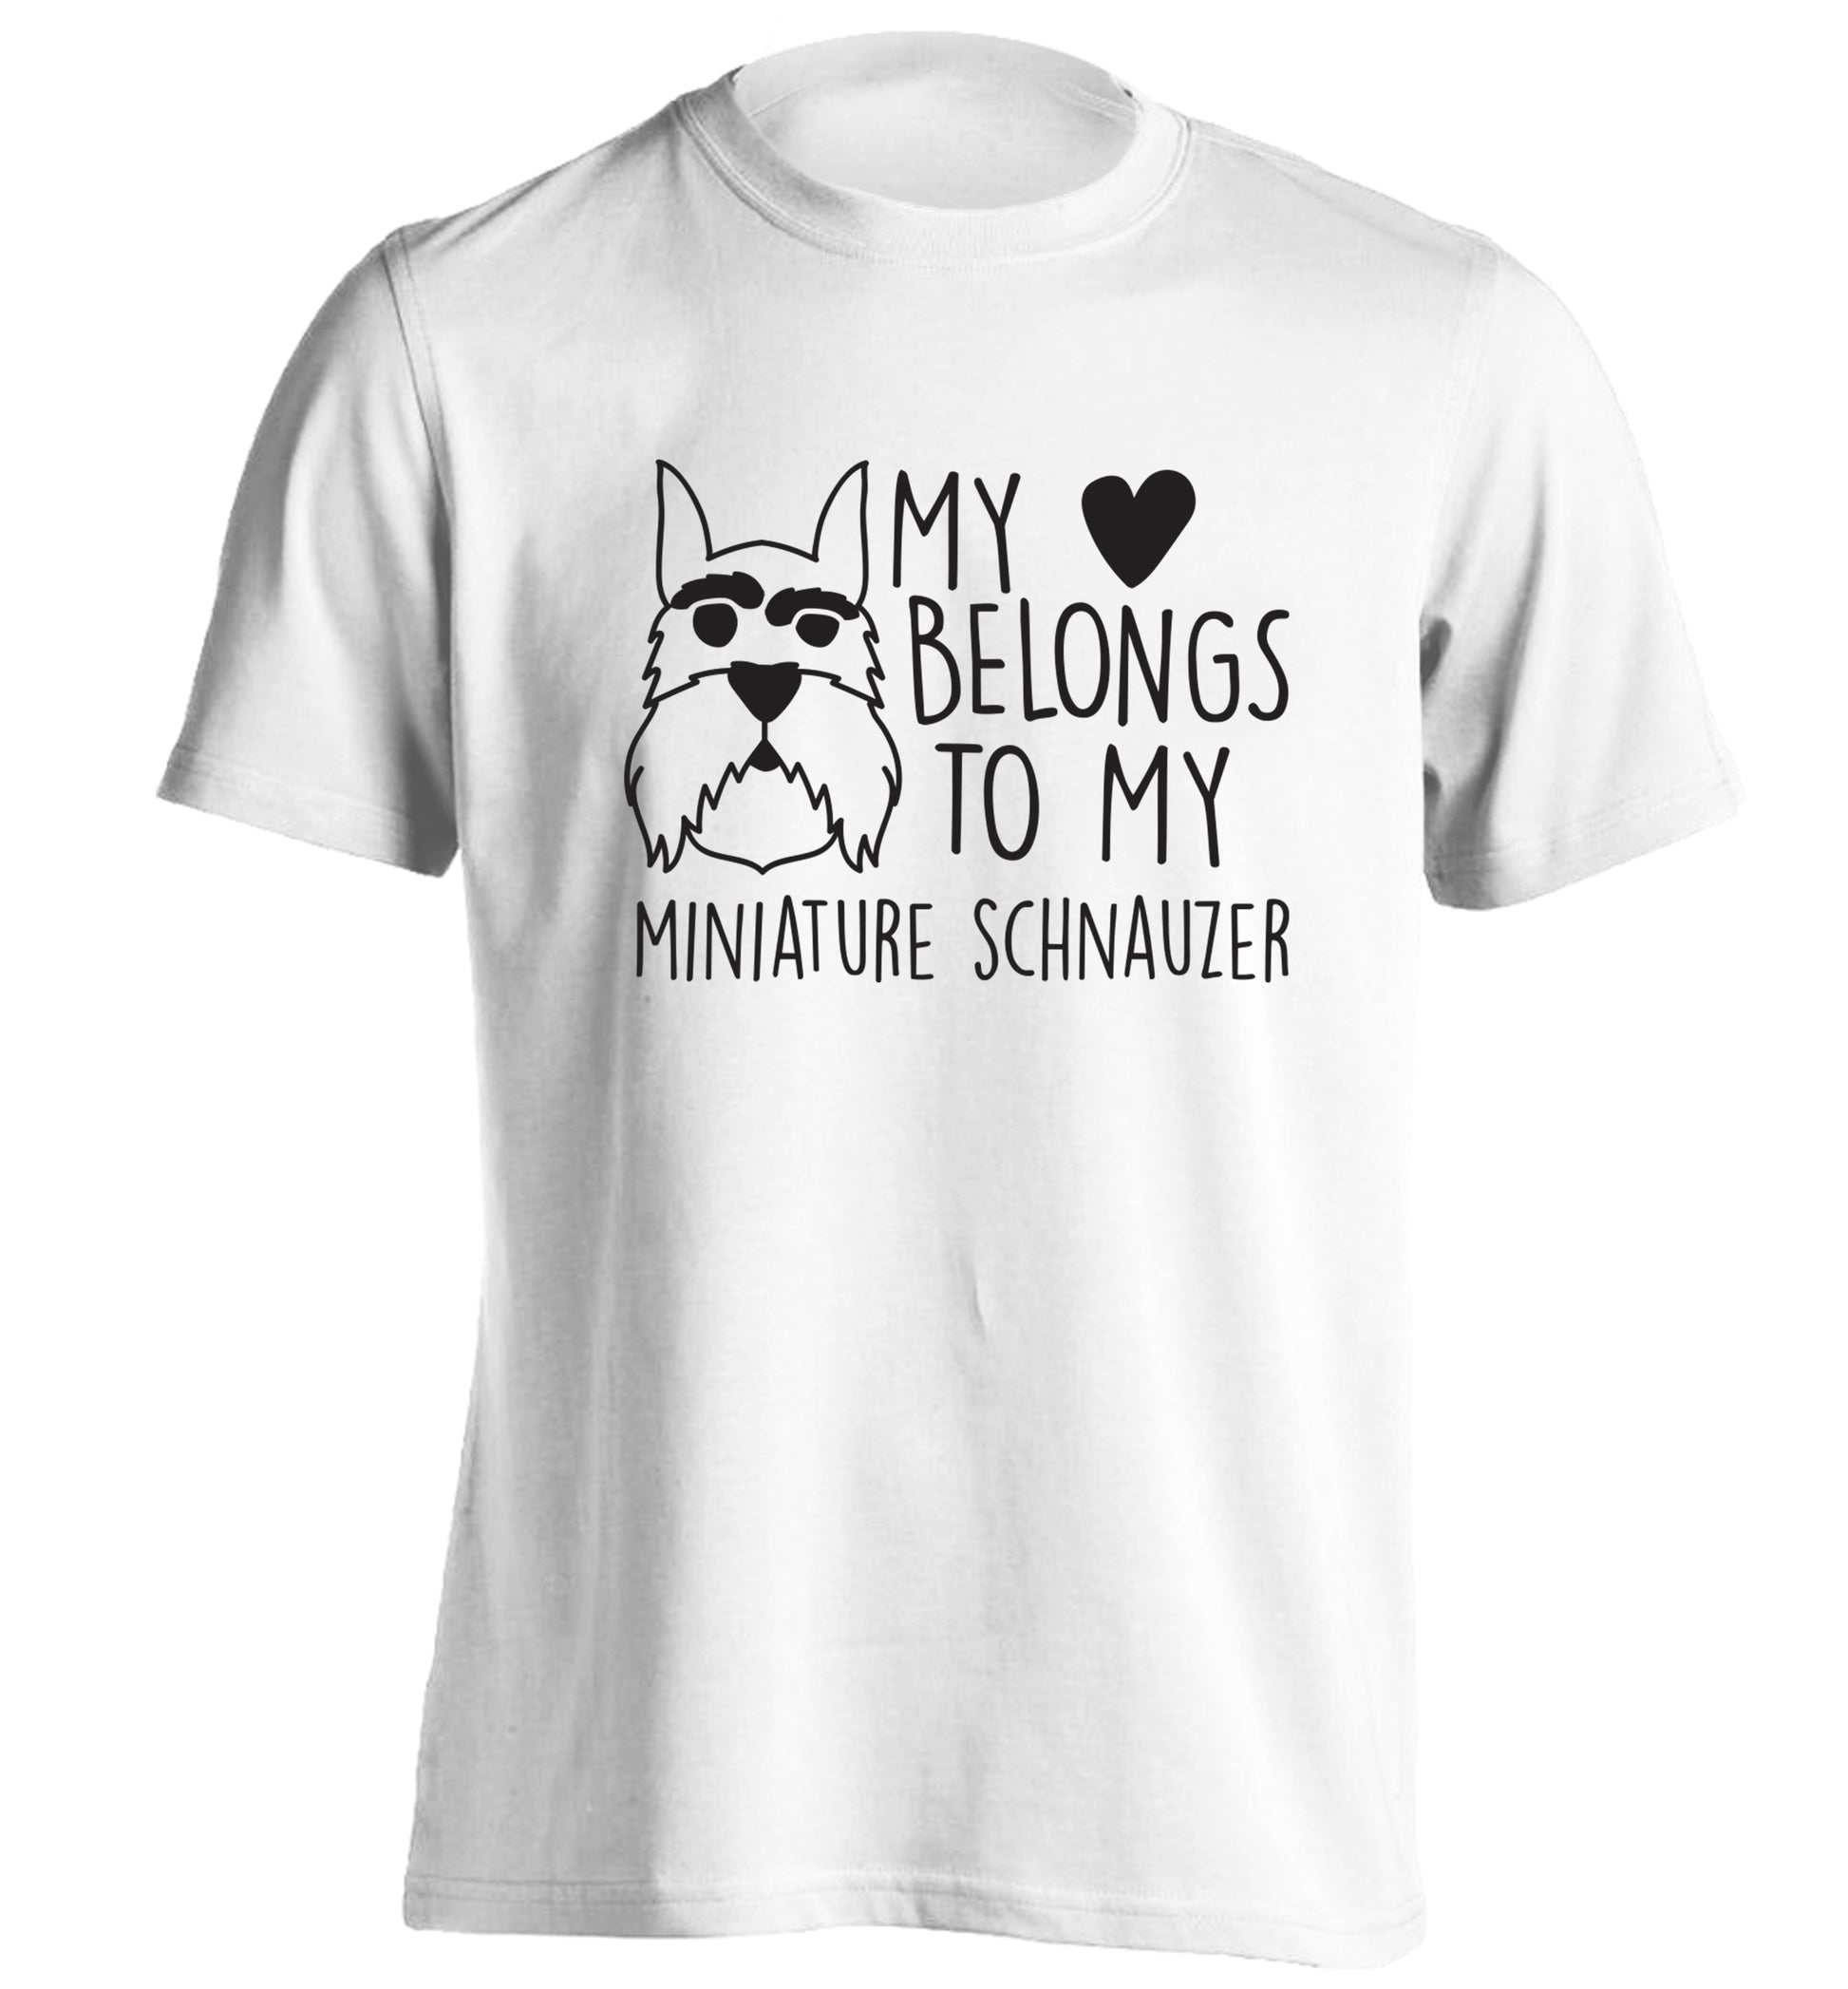 My heart belongs to my miniature schnauzer adults unisex white Tshirt 2XL